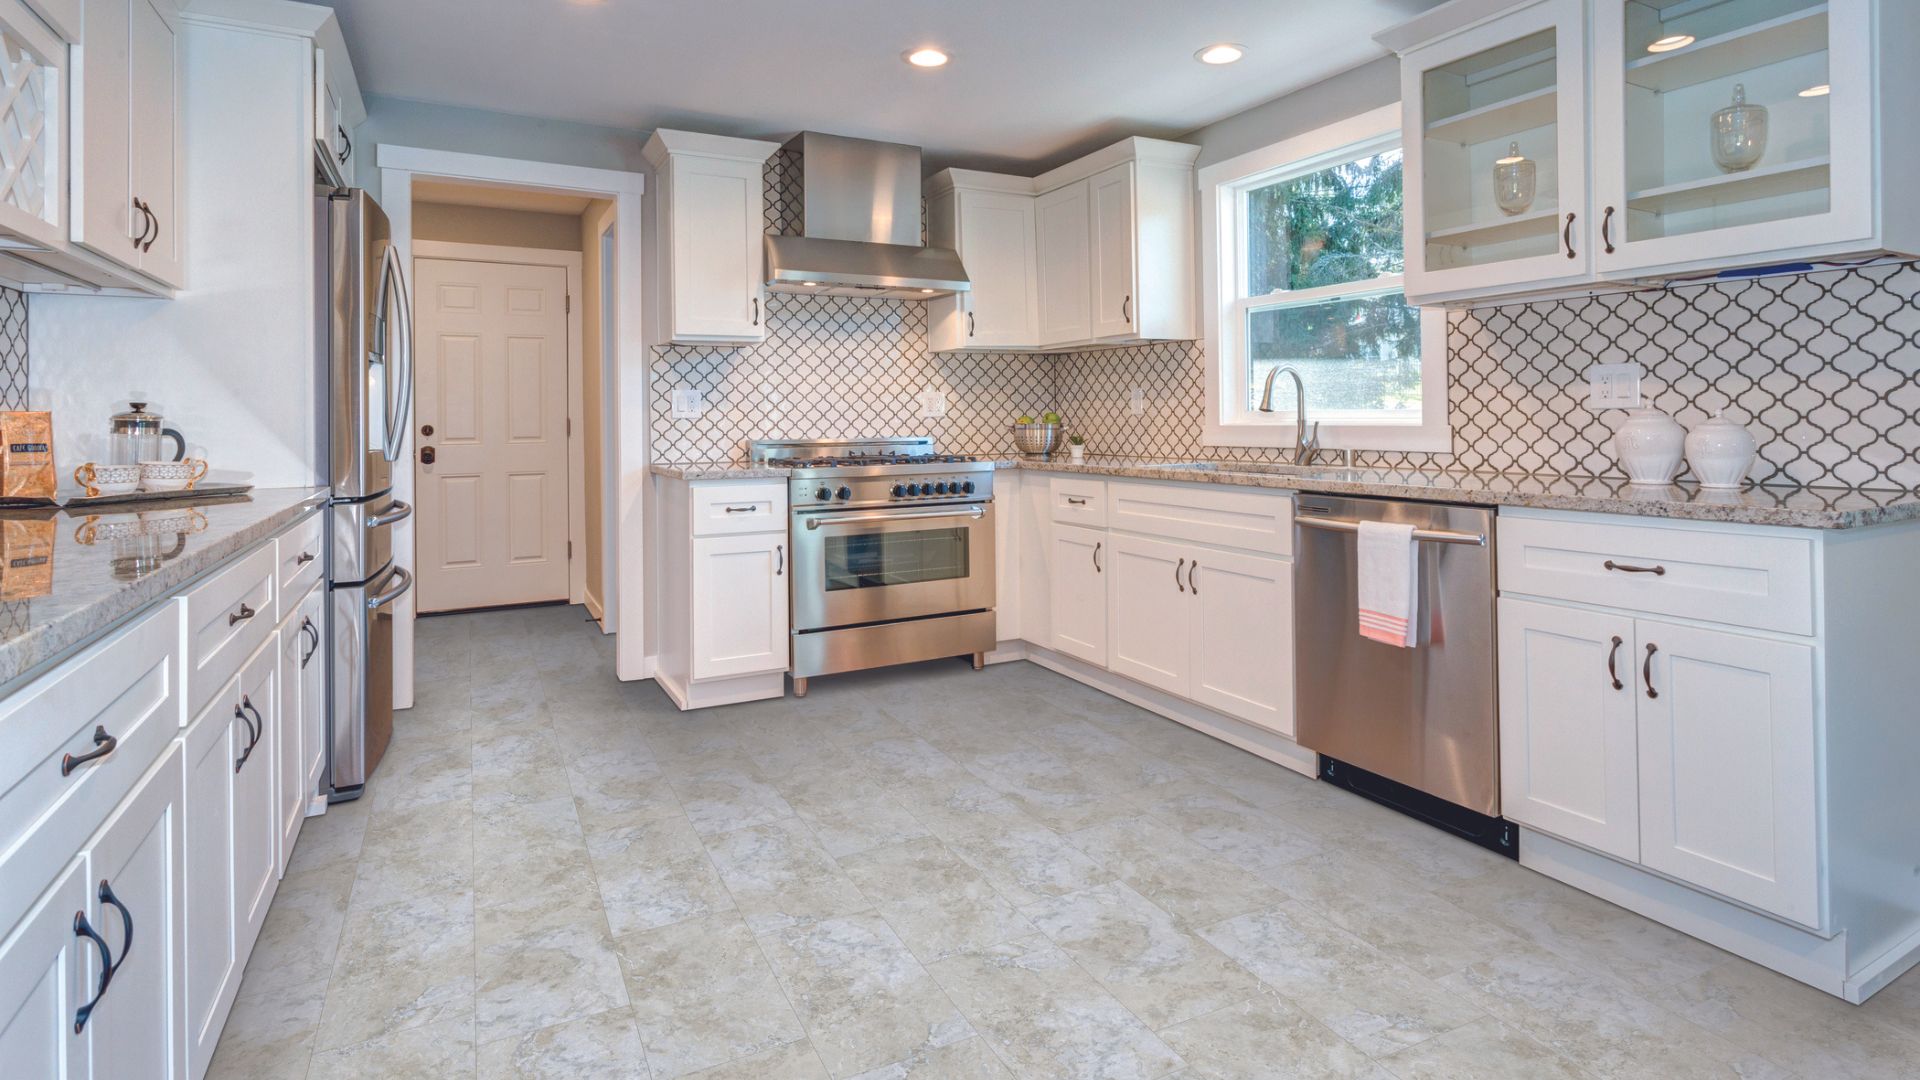 Tile flooring in kitchen 